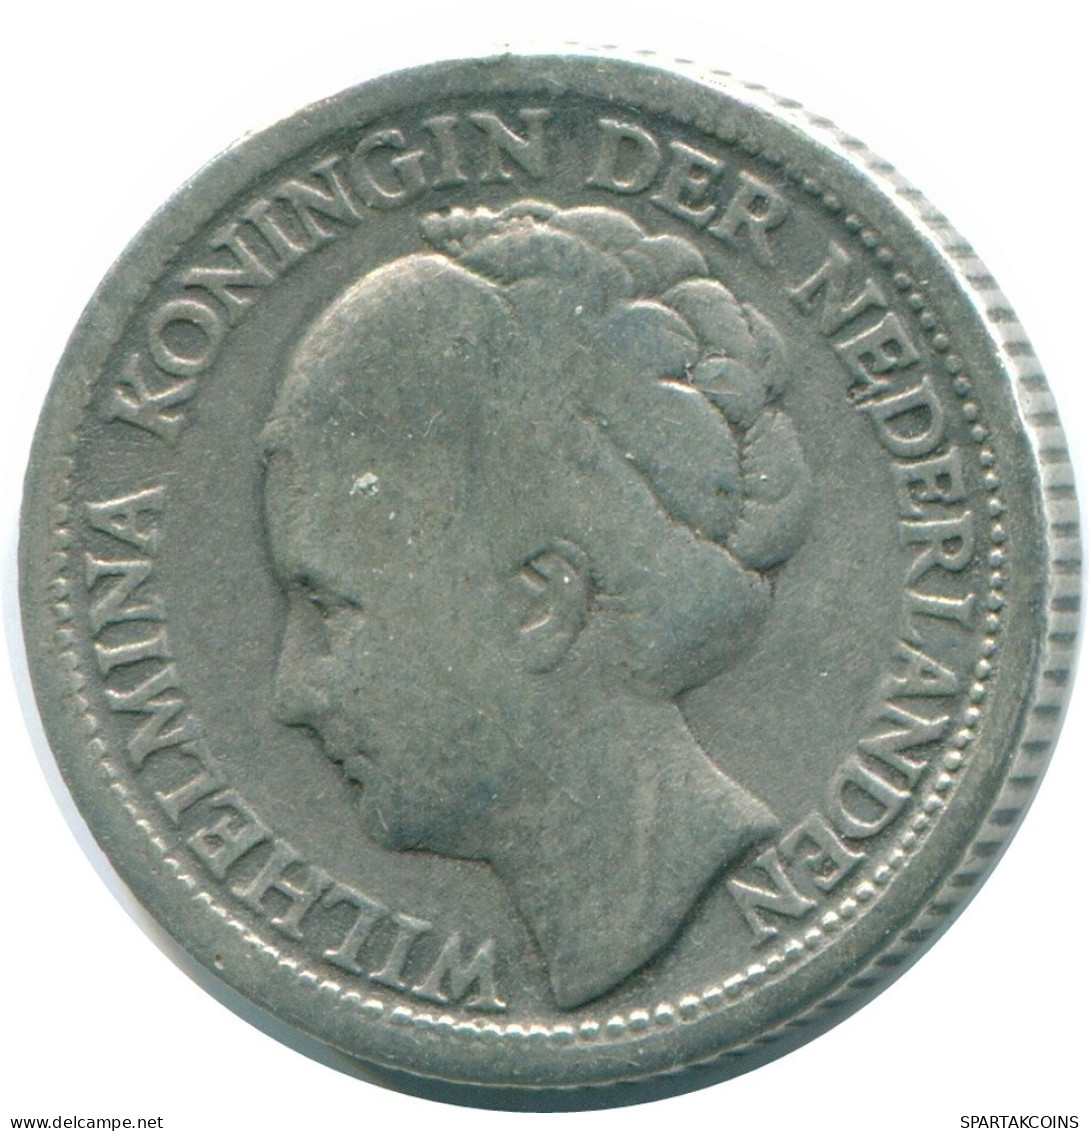 1/4 GULDEN 1944 CURACAO Netherlands SILVER Colonial Coin #NL10698.4.U.A - Curacao